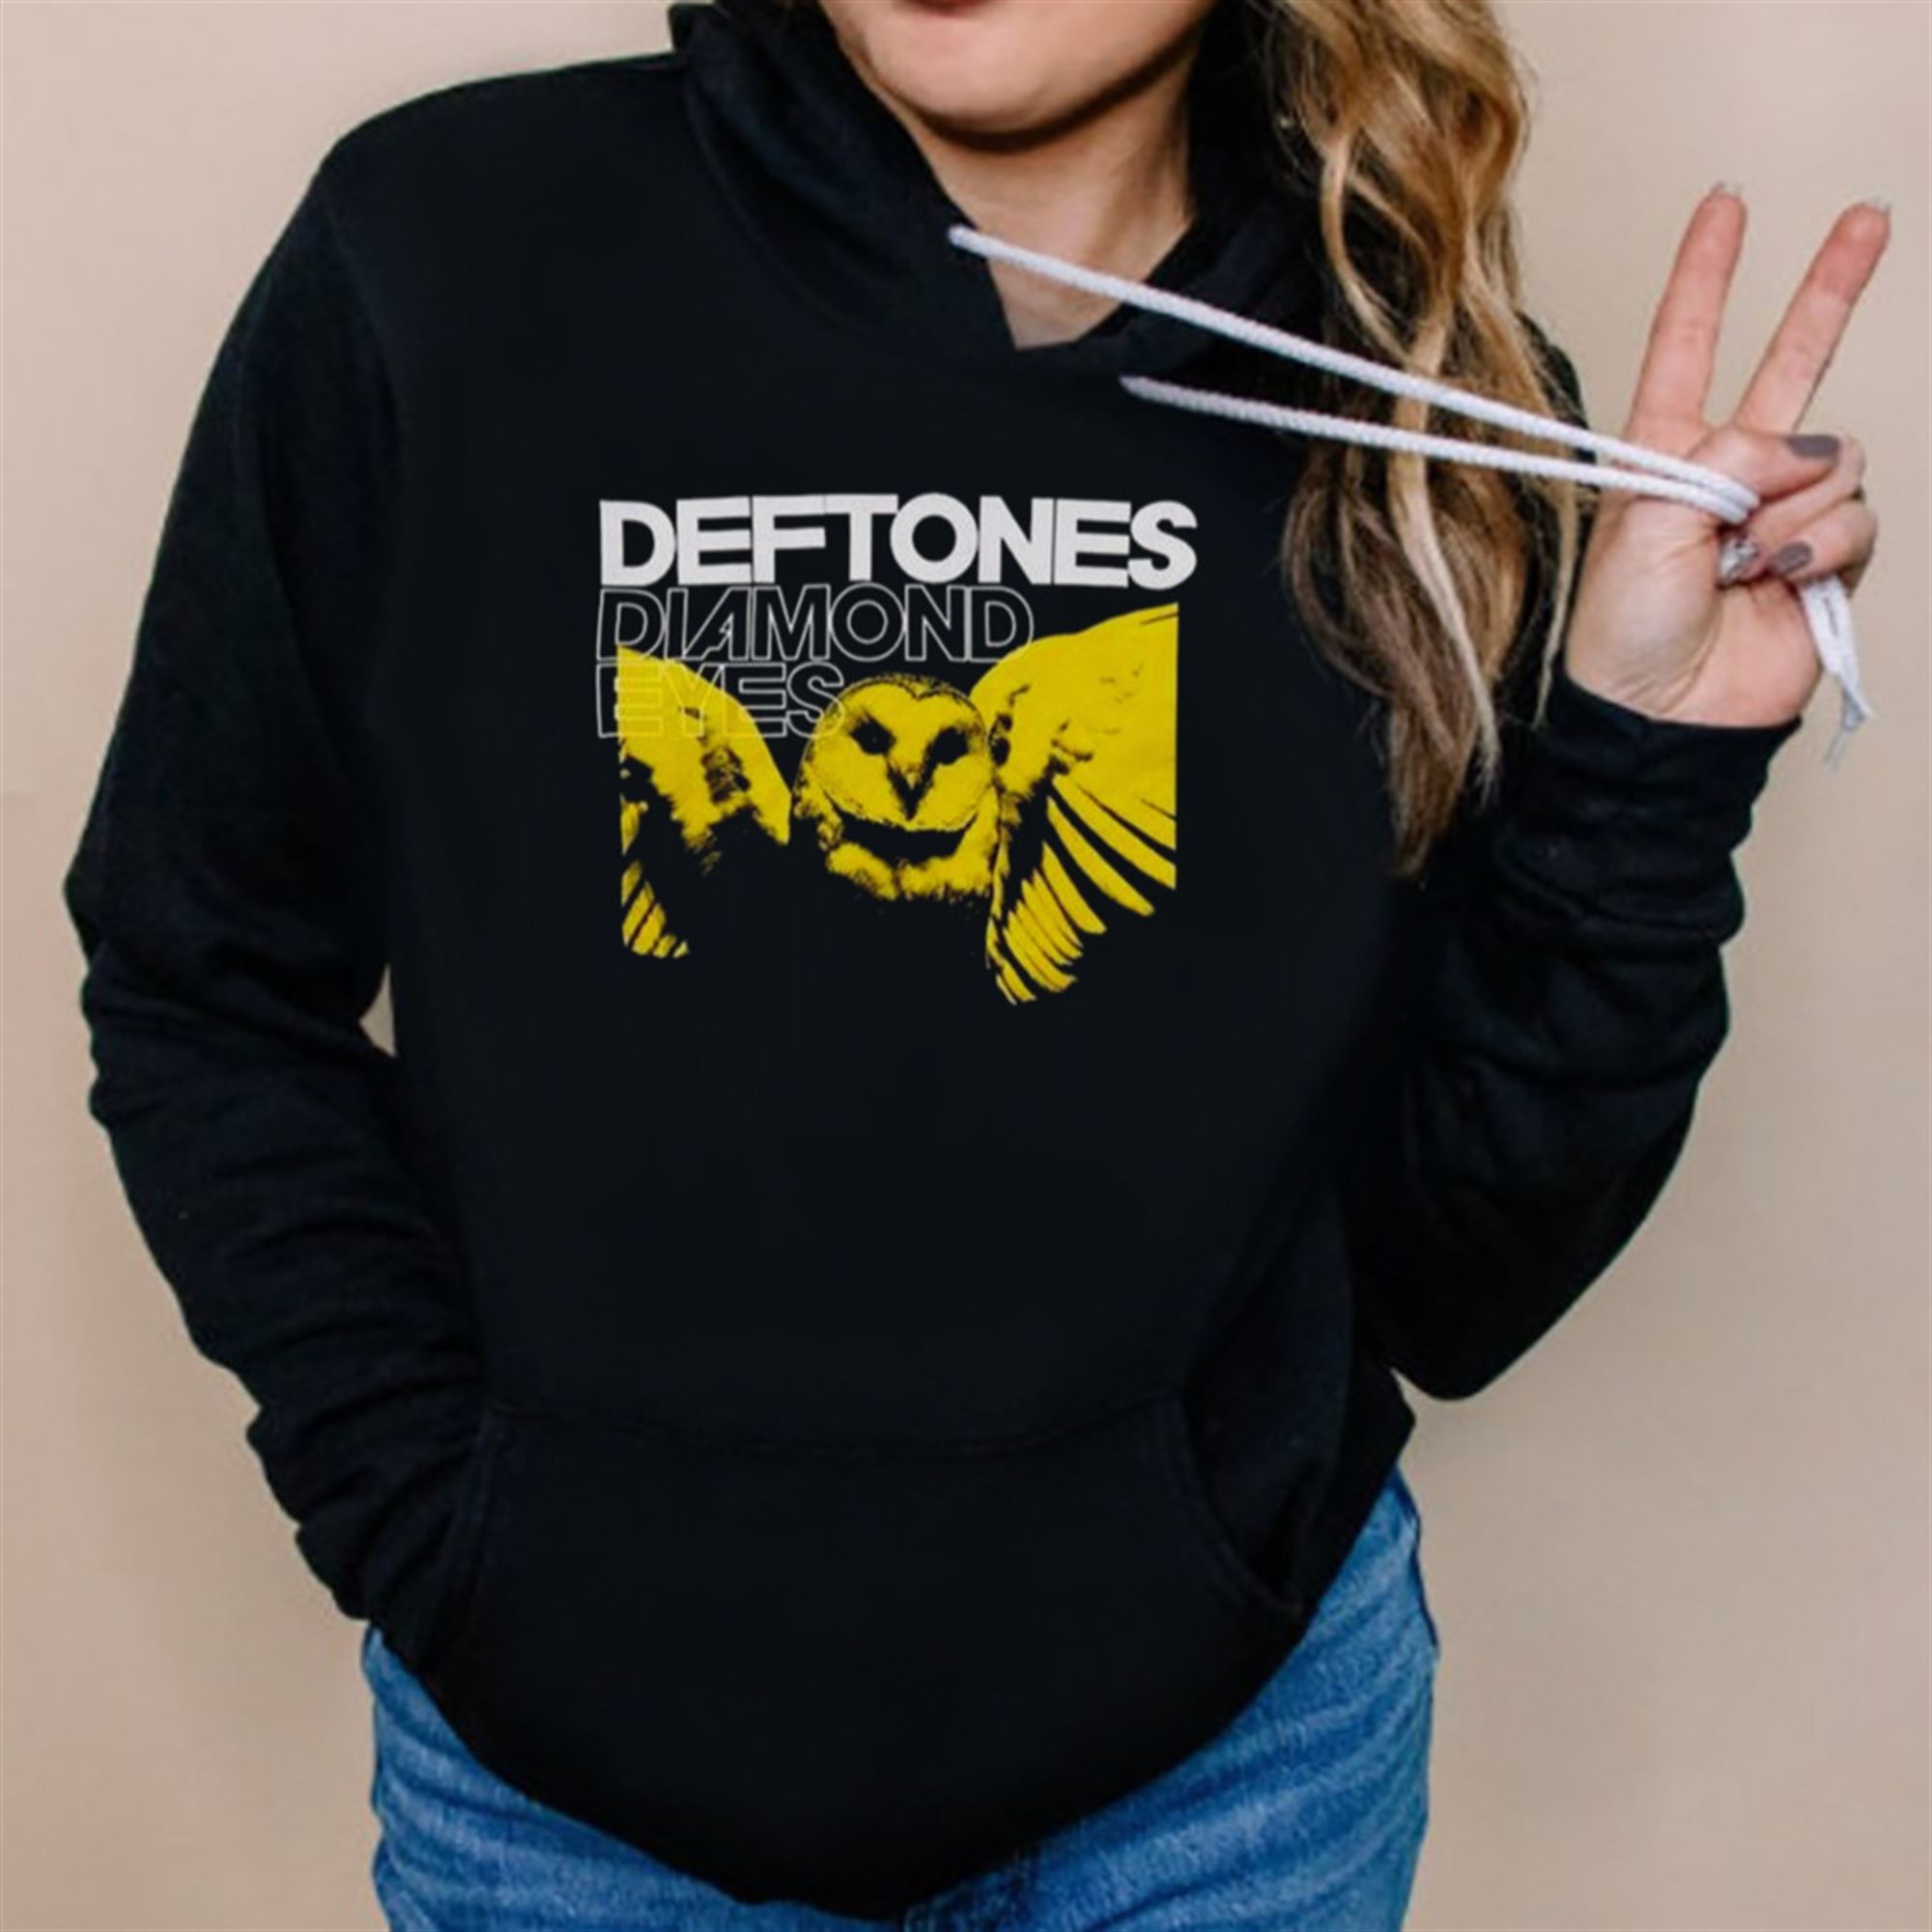 Deftones Diamond Eyes T-shirt 